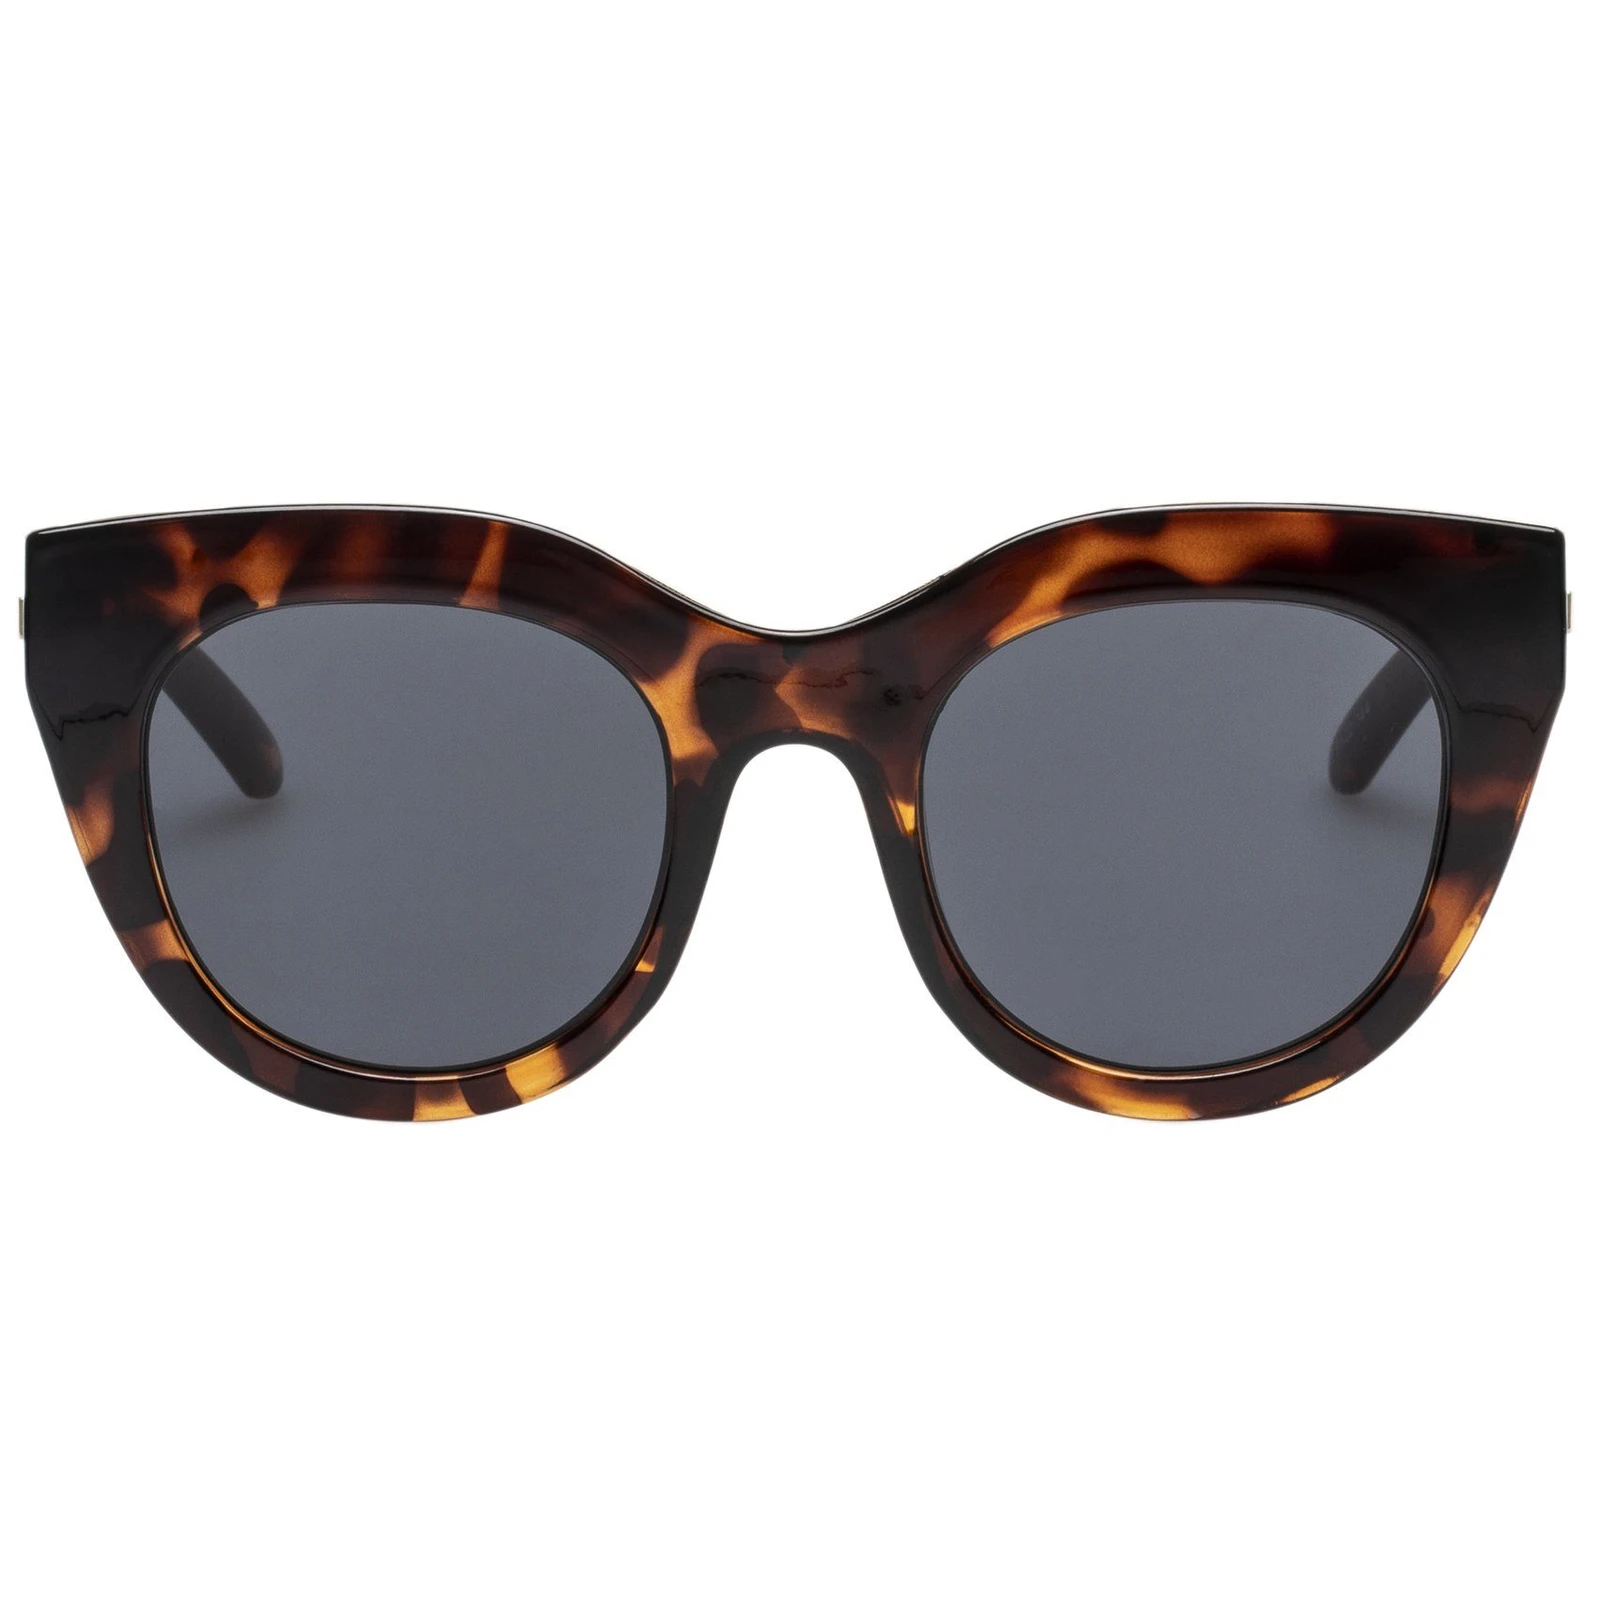 Le Specs Sunglasses - Air Heart - Tort